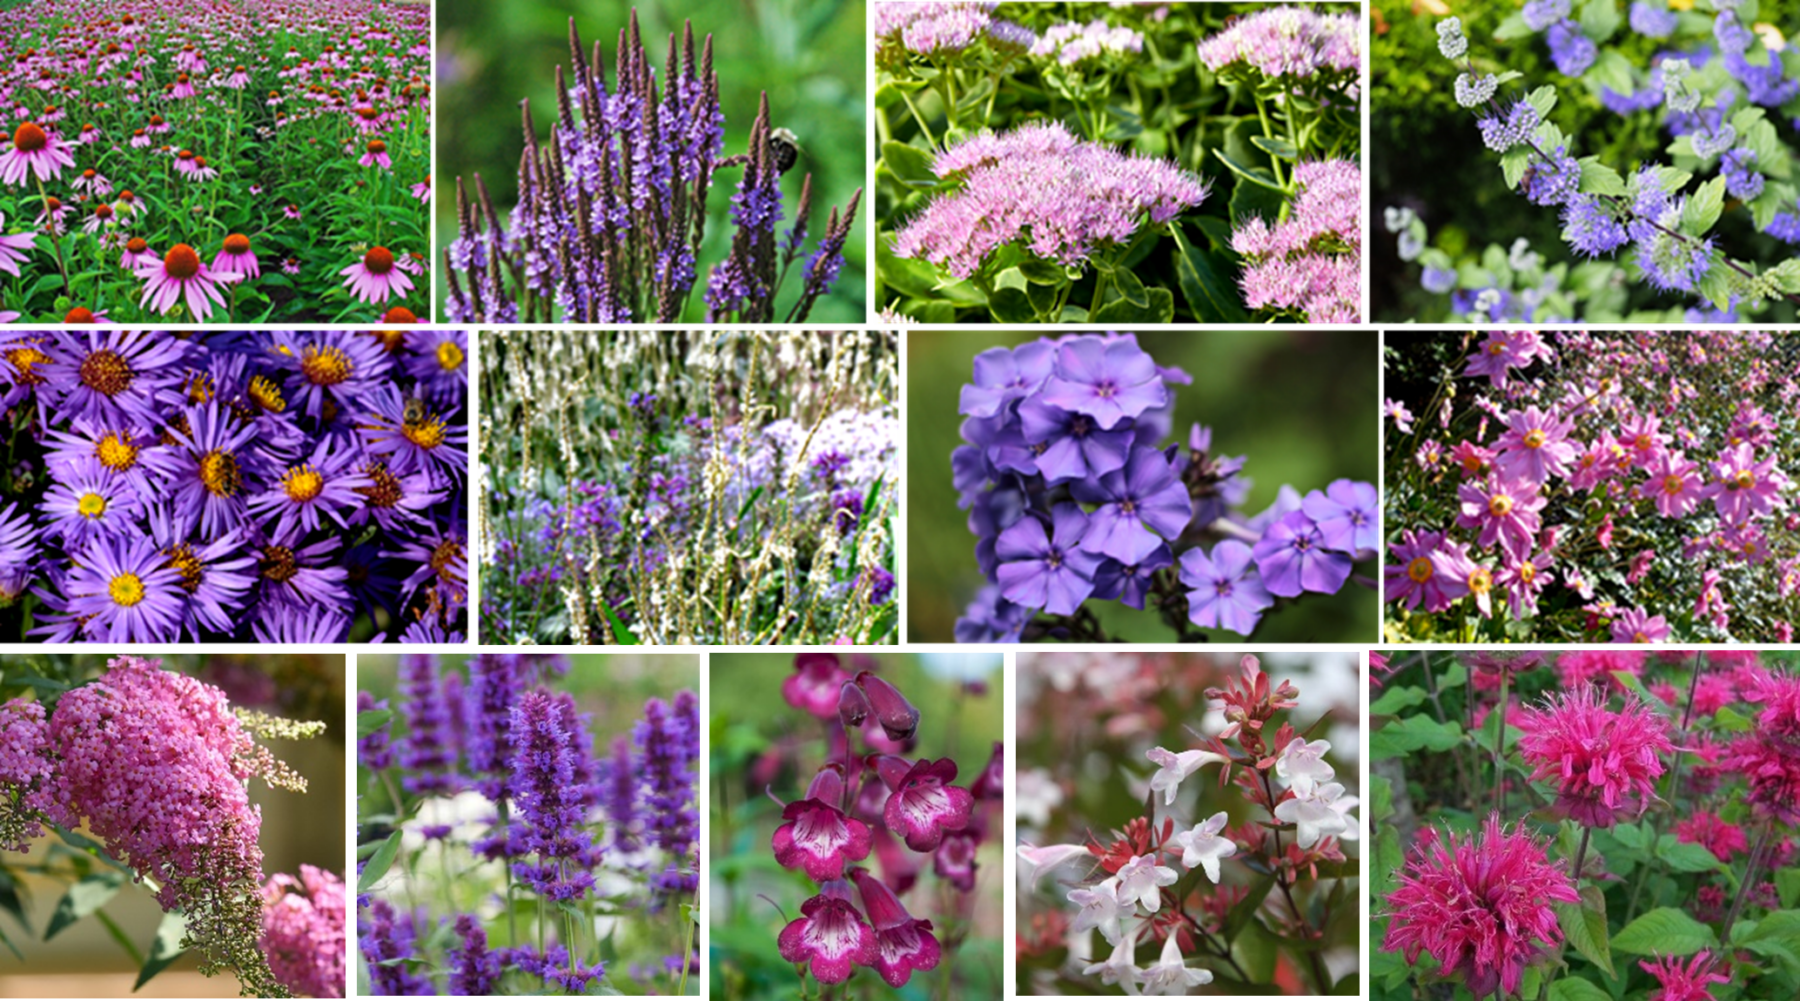 Colour In The Garden: Monthly Focus